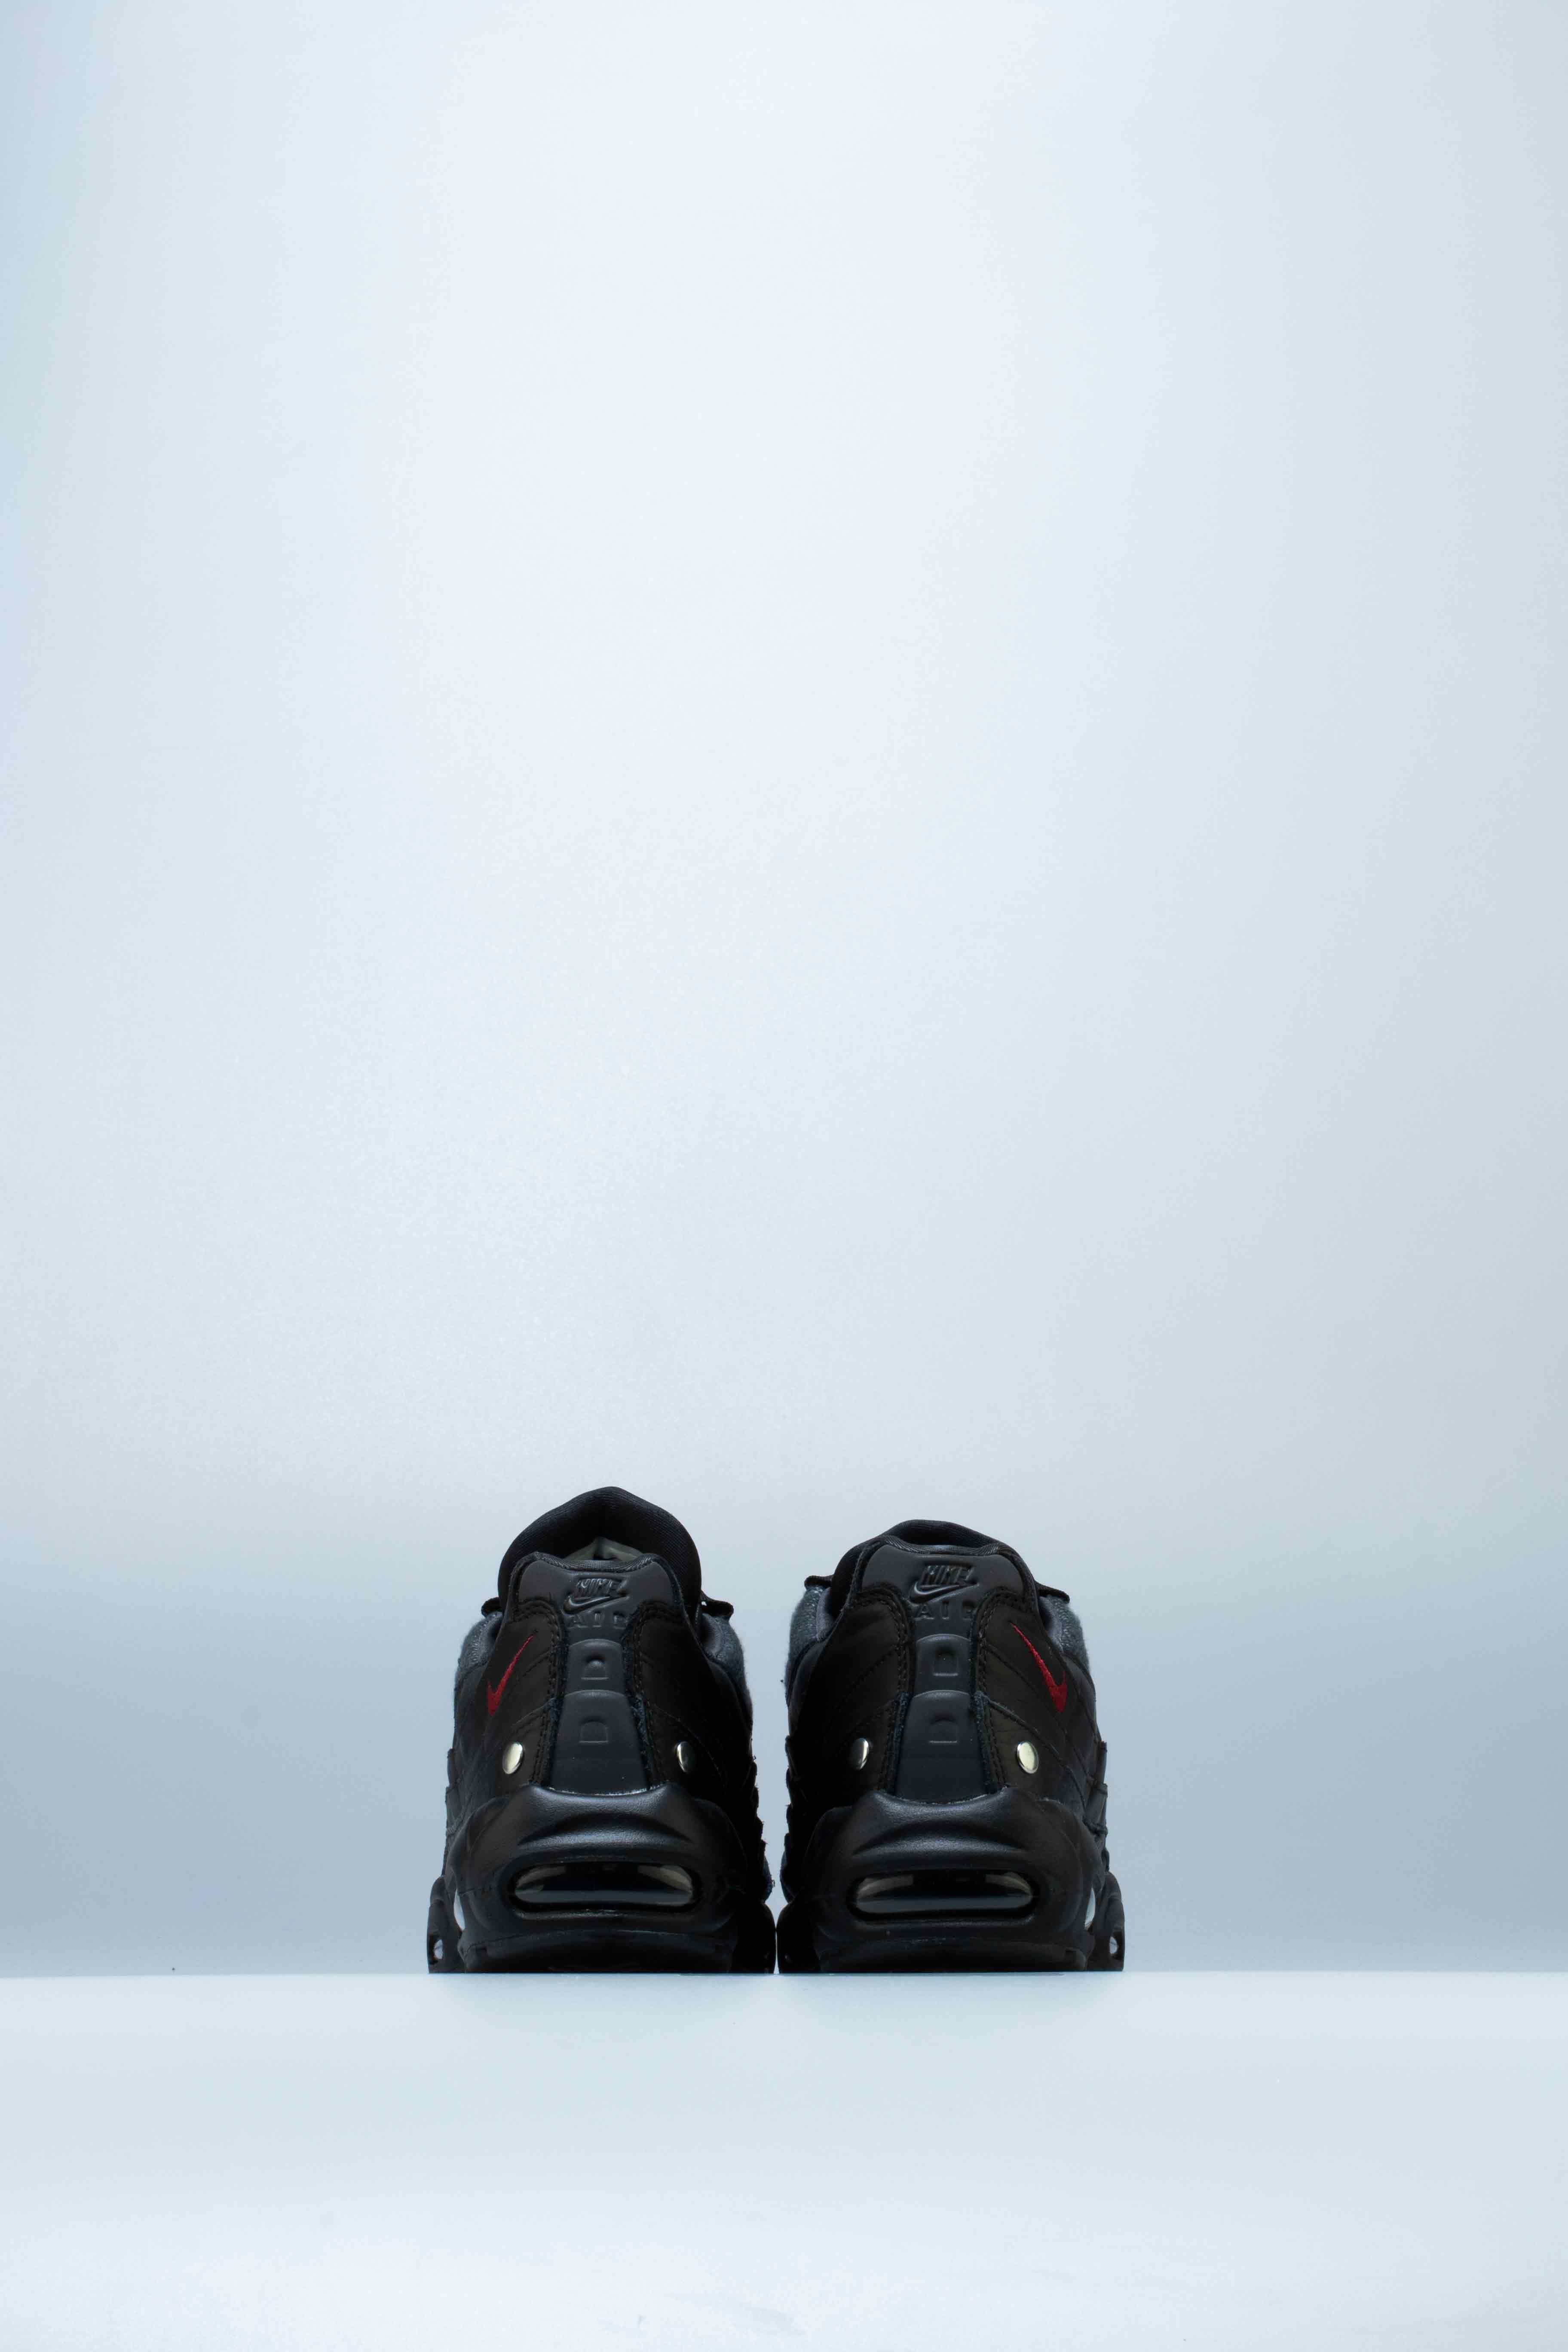 Men's shoes Nike Air Max Plus TN Ultra Black/ Anthracite-Black